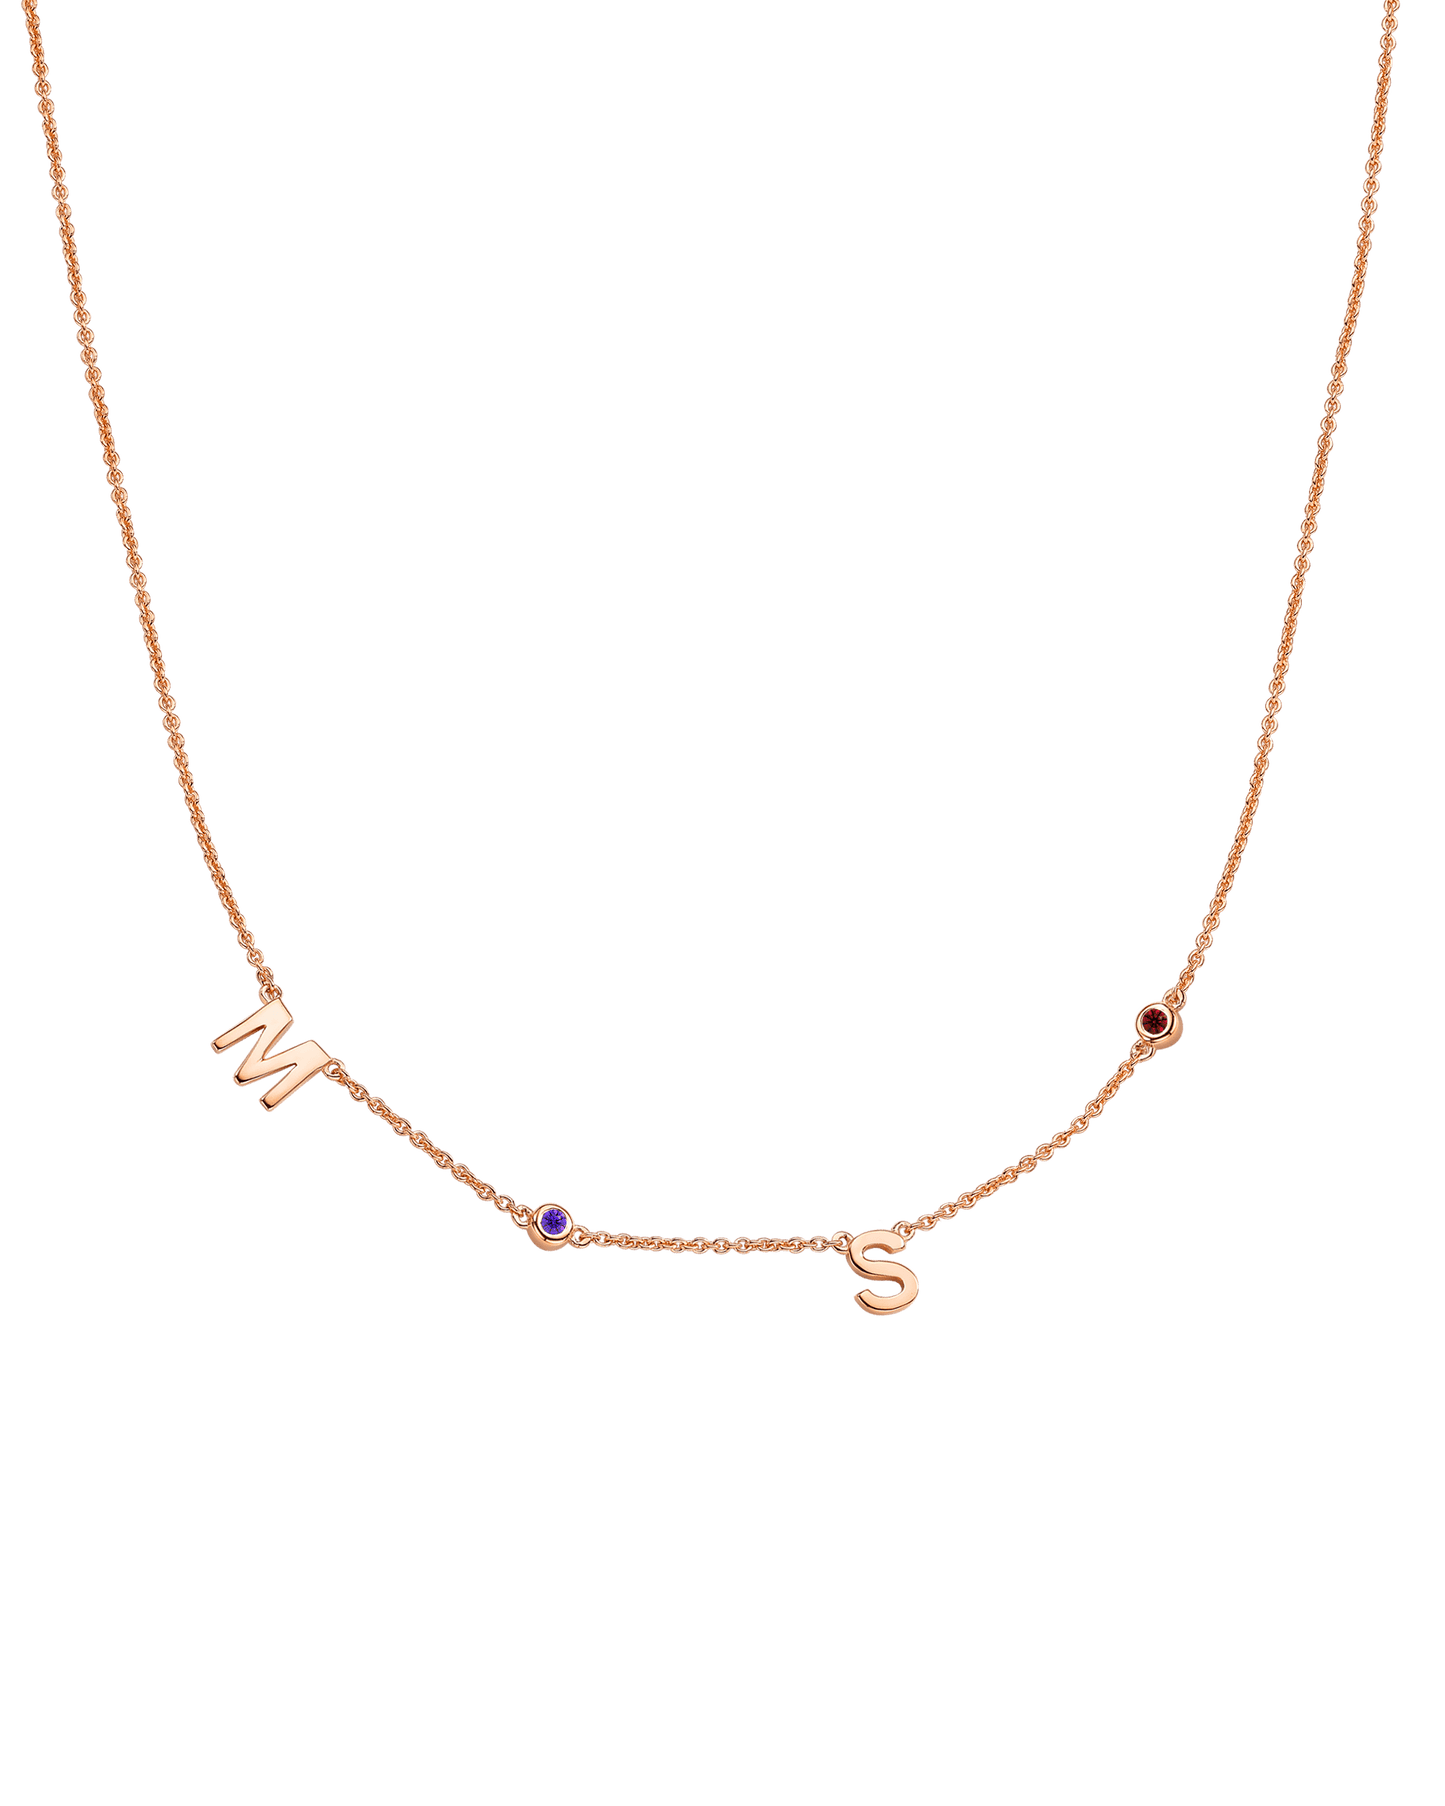 Initial Birthstone Necklace - 14K Rose Gold Necklaces magal-dev 2 Initials + 2 Birthstones Adjustable 16-17" (40cm-43cm) 